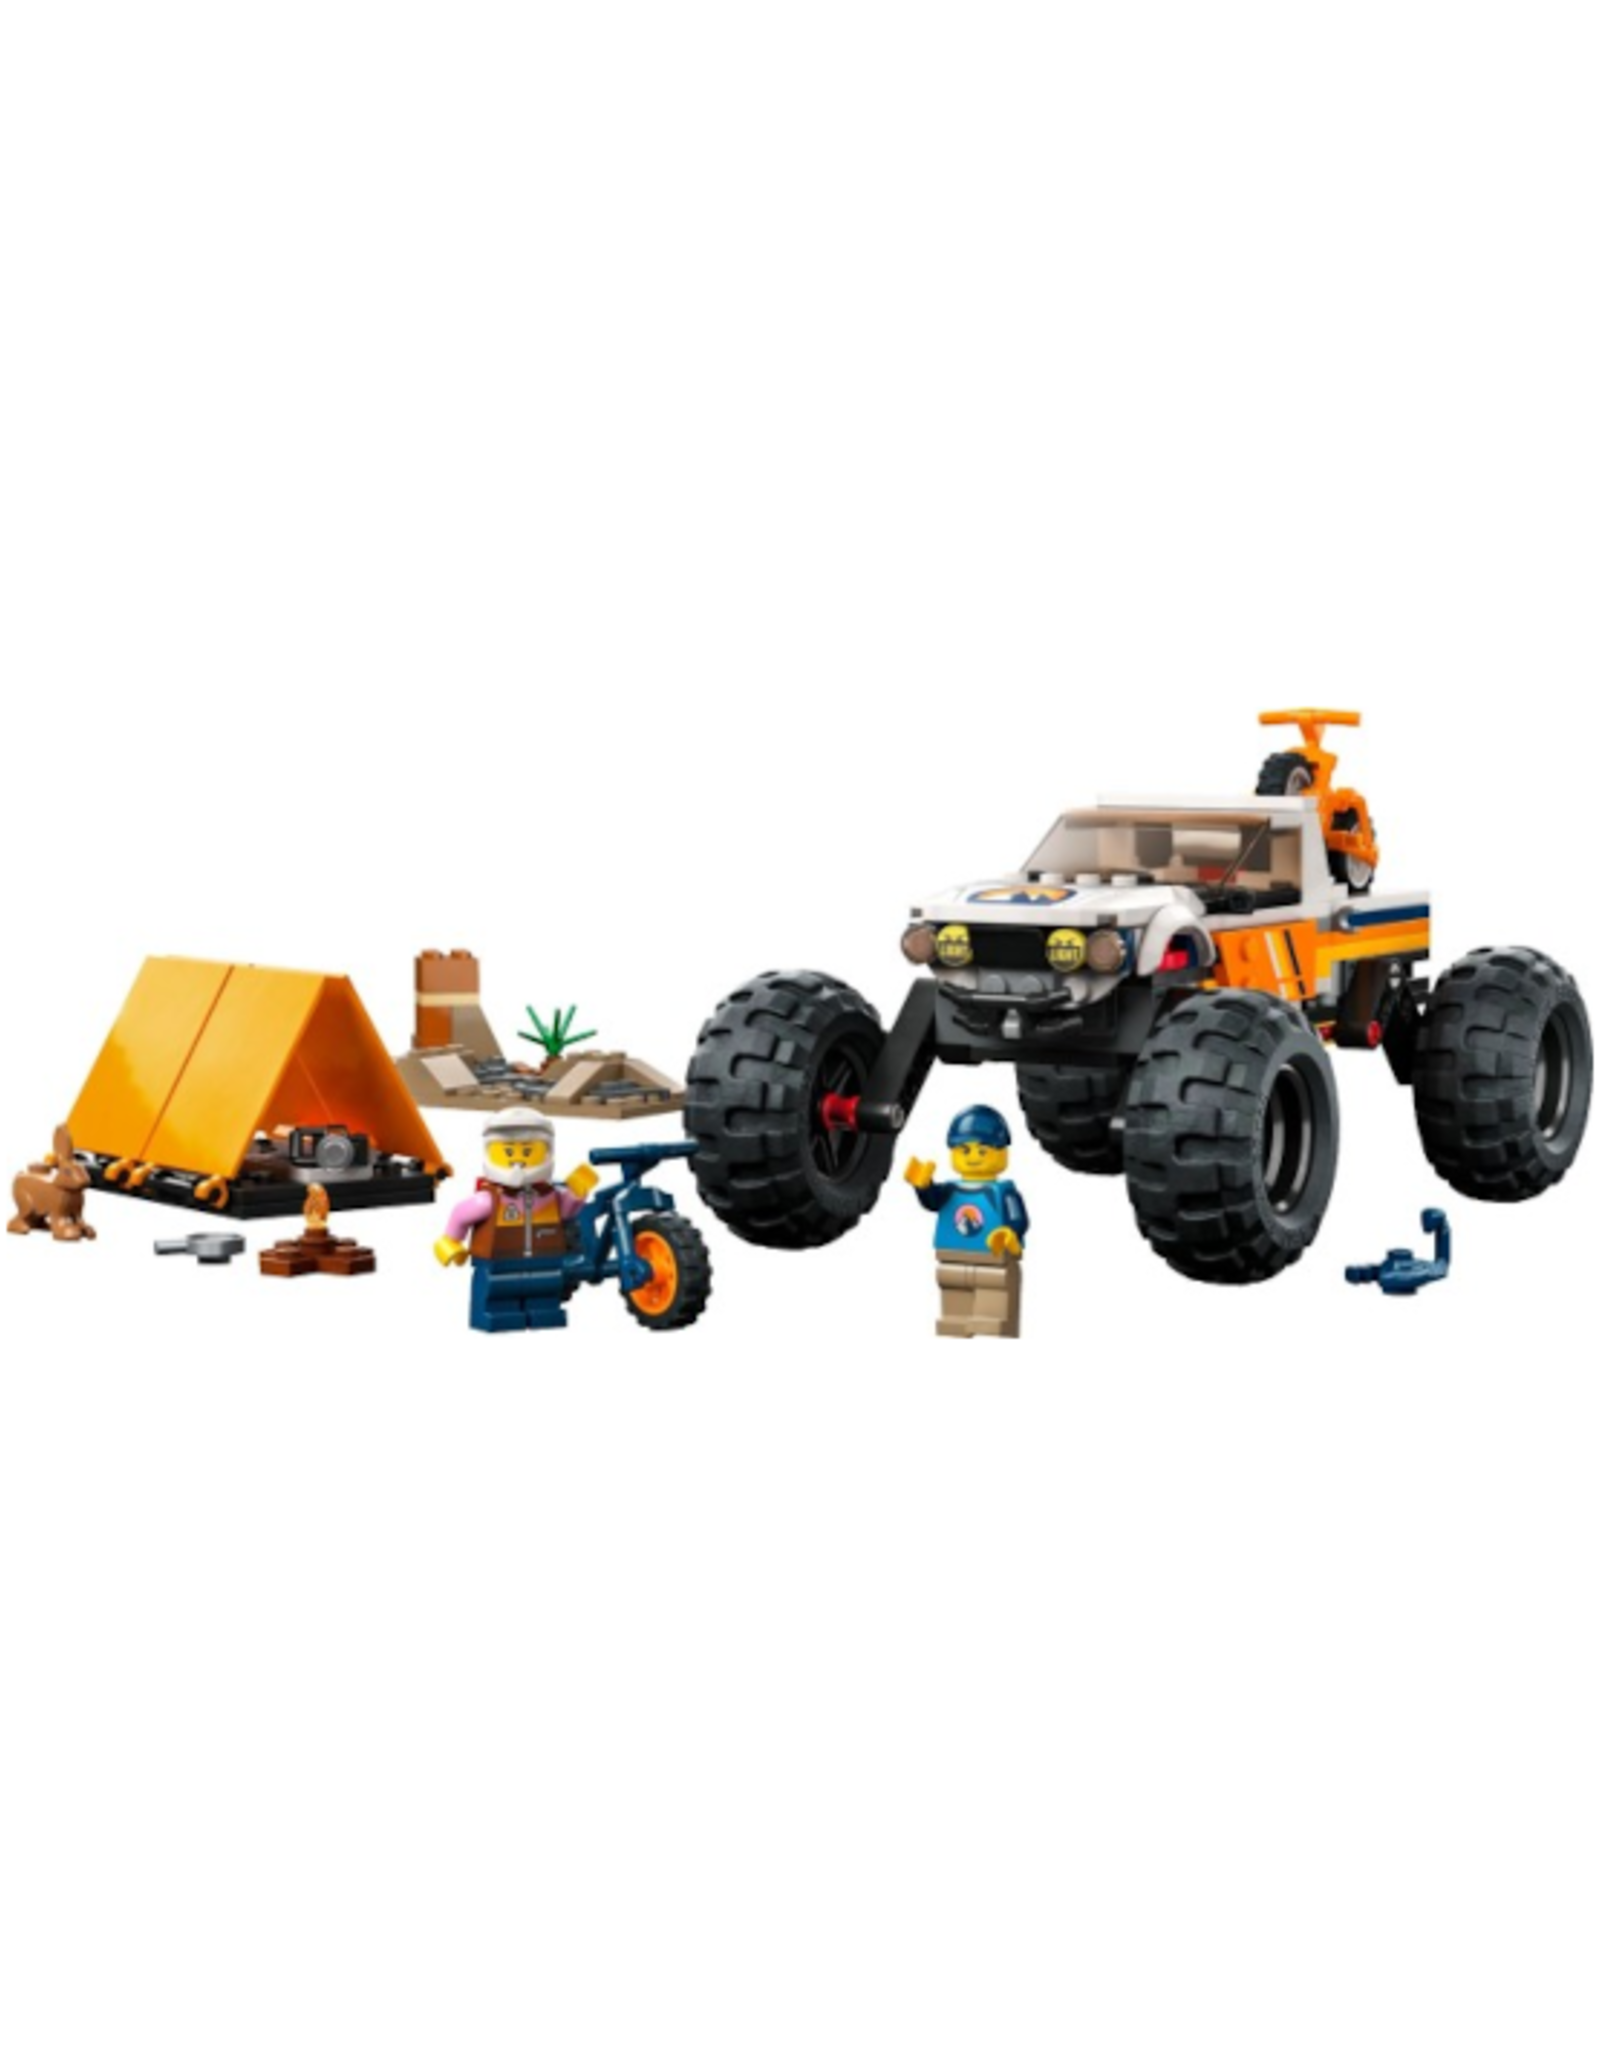 Lego Lego - City - 60387 - 4x4 Off-Roader Adventures